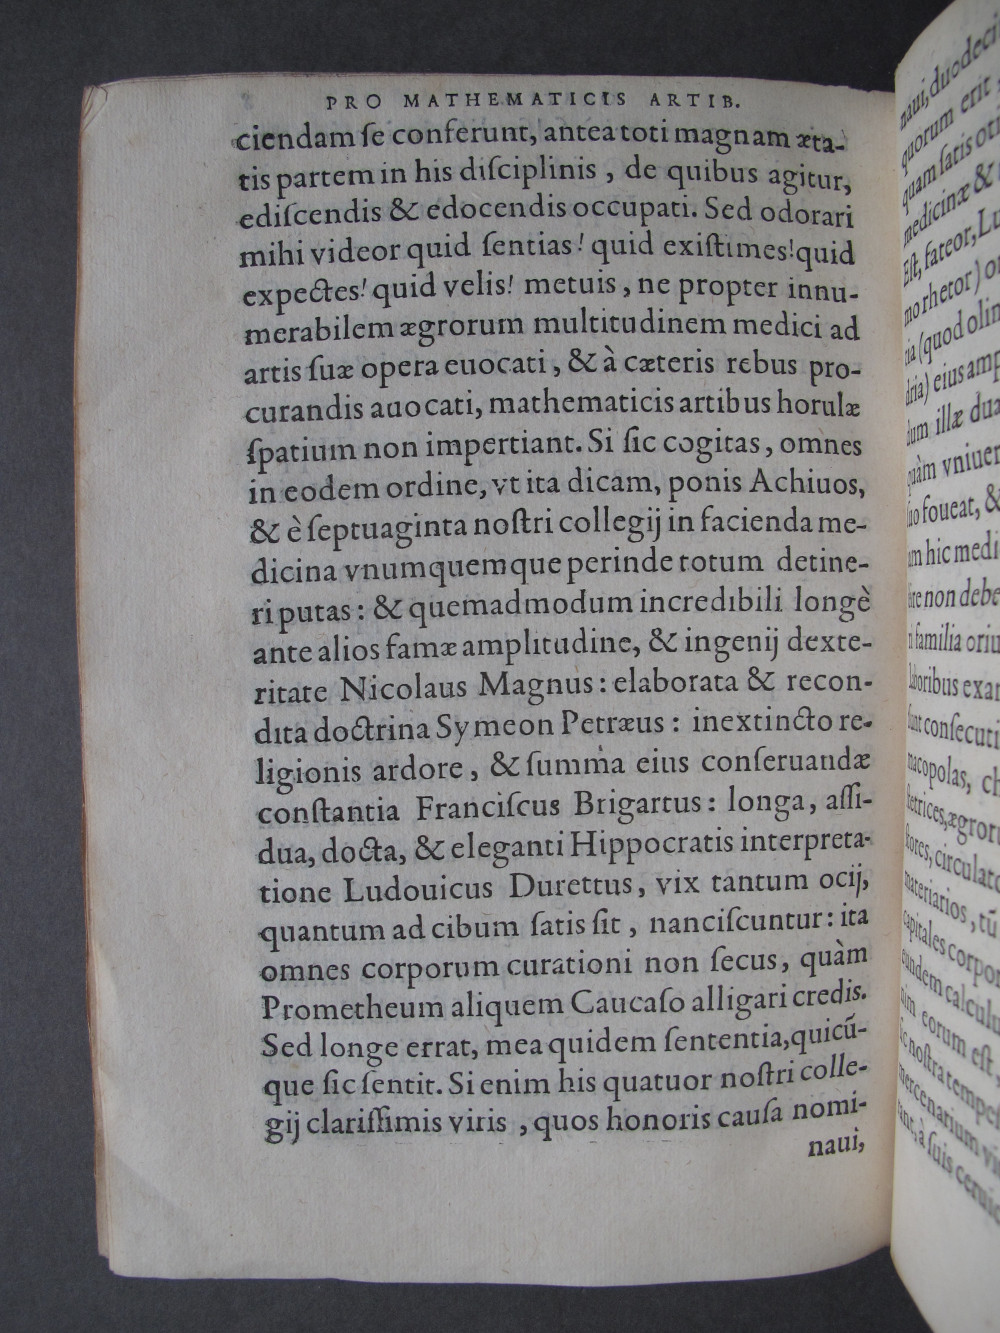 Folio 8 verso